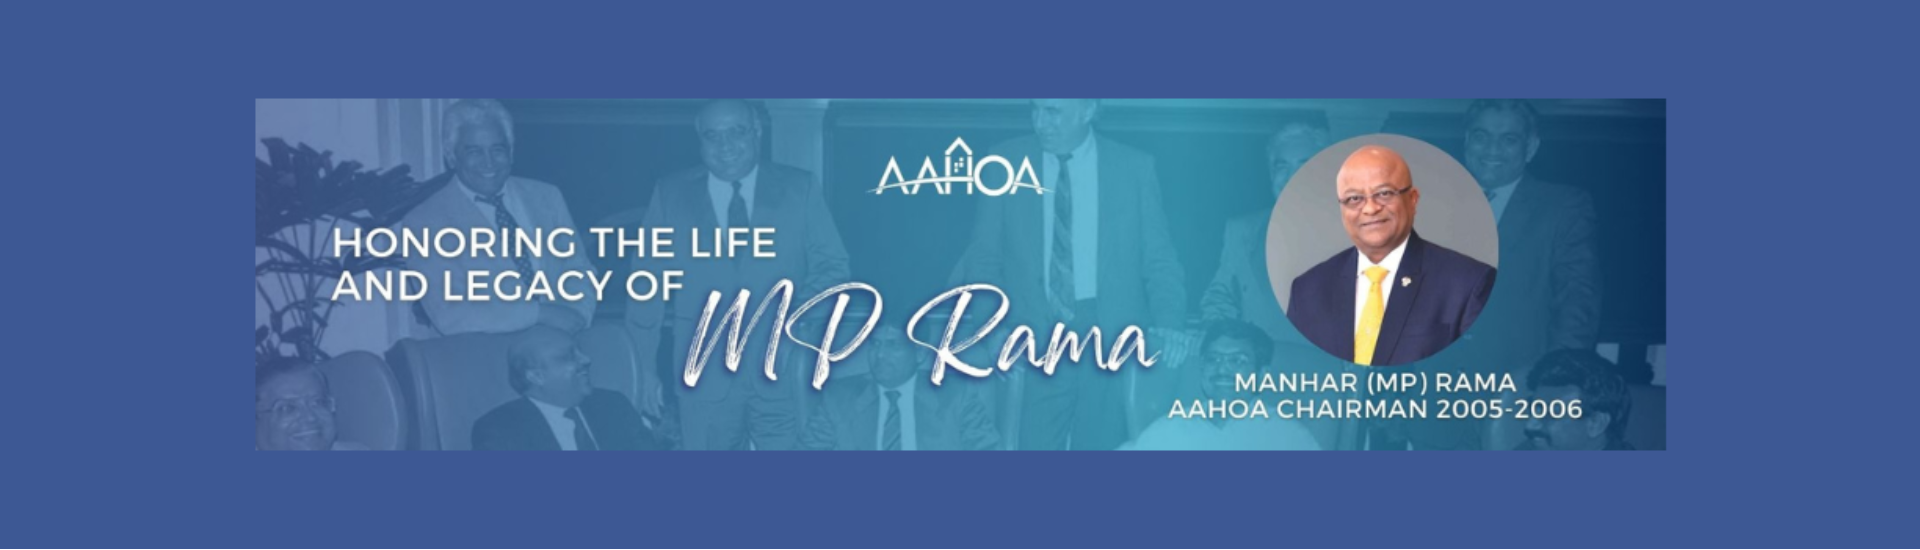 AAHOA Statement on Passing of Manhar P. (MP) Rama